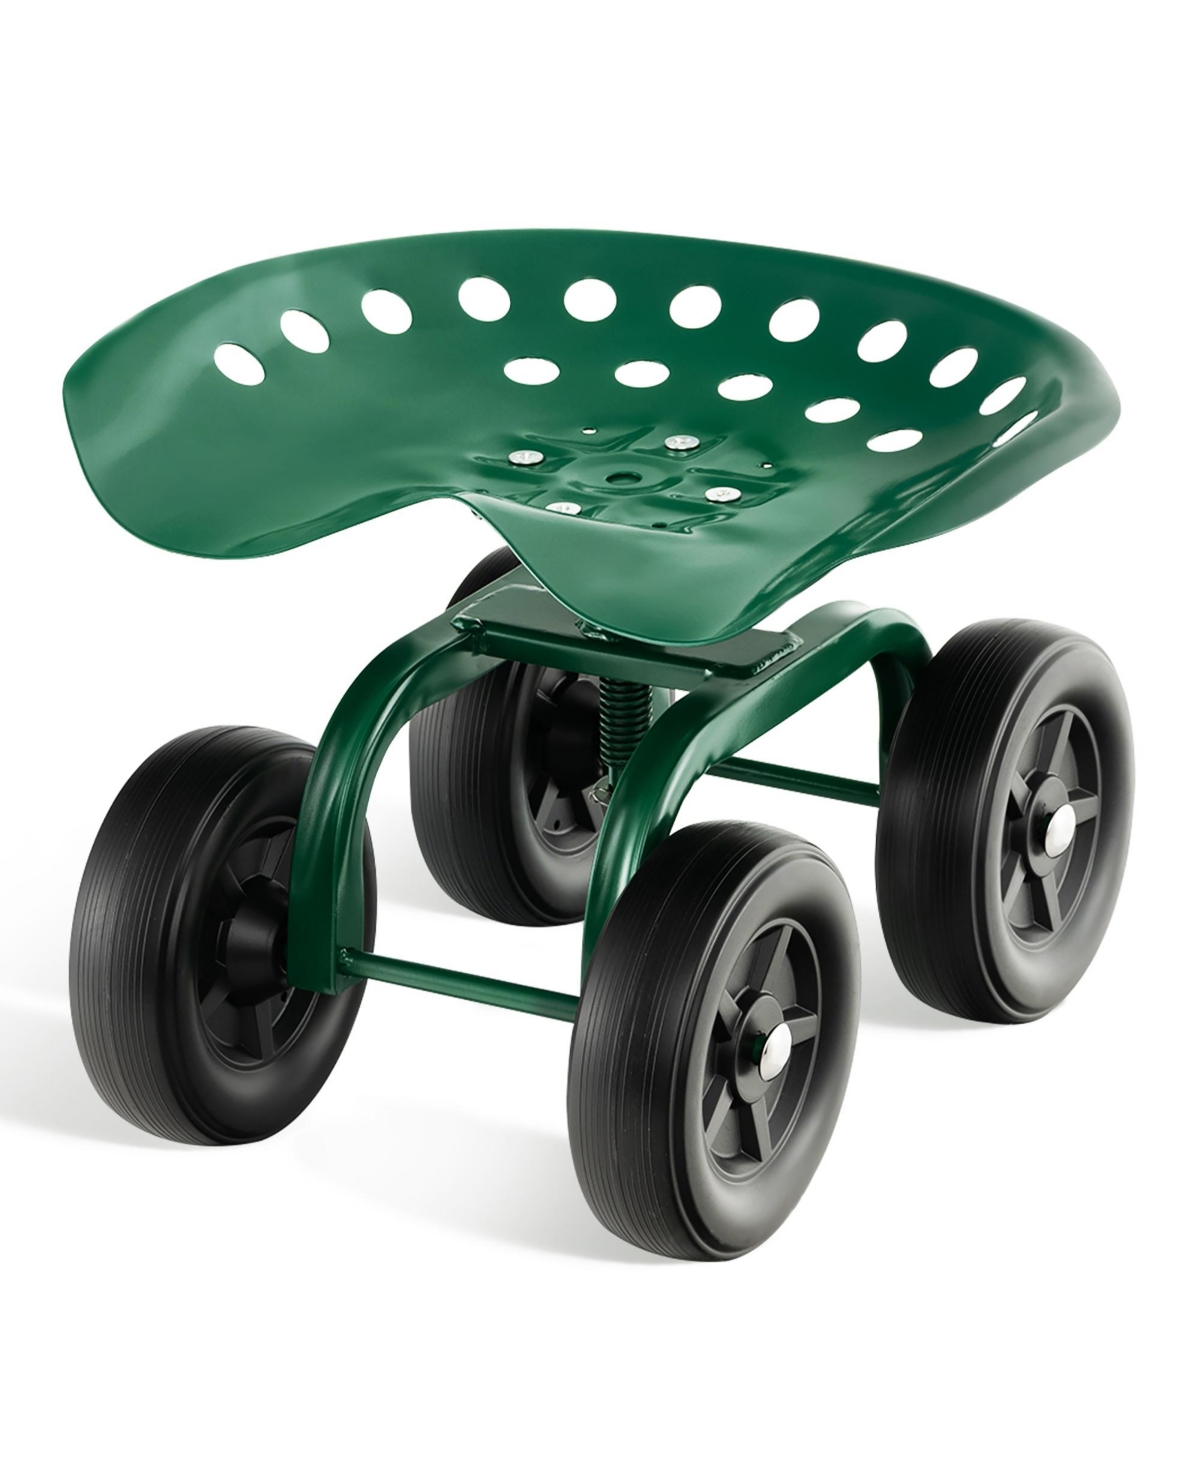 Rolling Garden Cart Heavy Duty Work seat with 360AÂ° Swivel Seat & Adjustable Height - Green